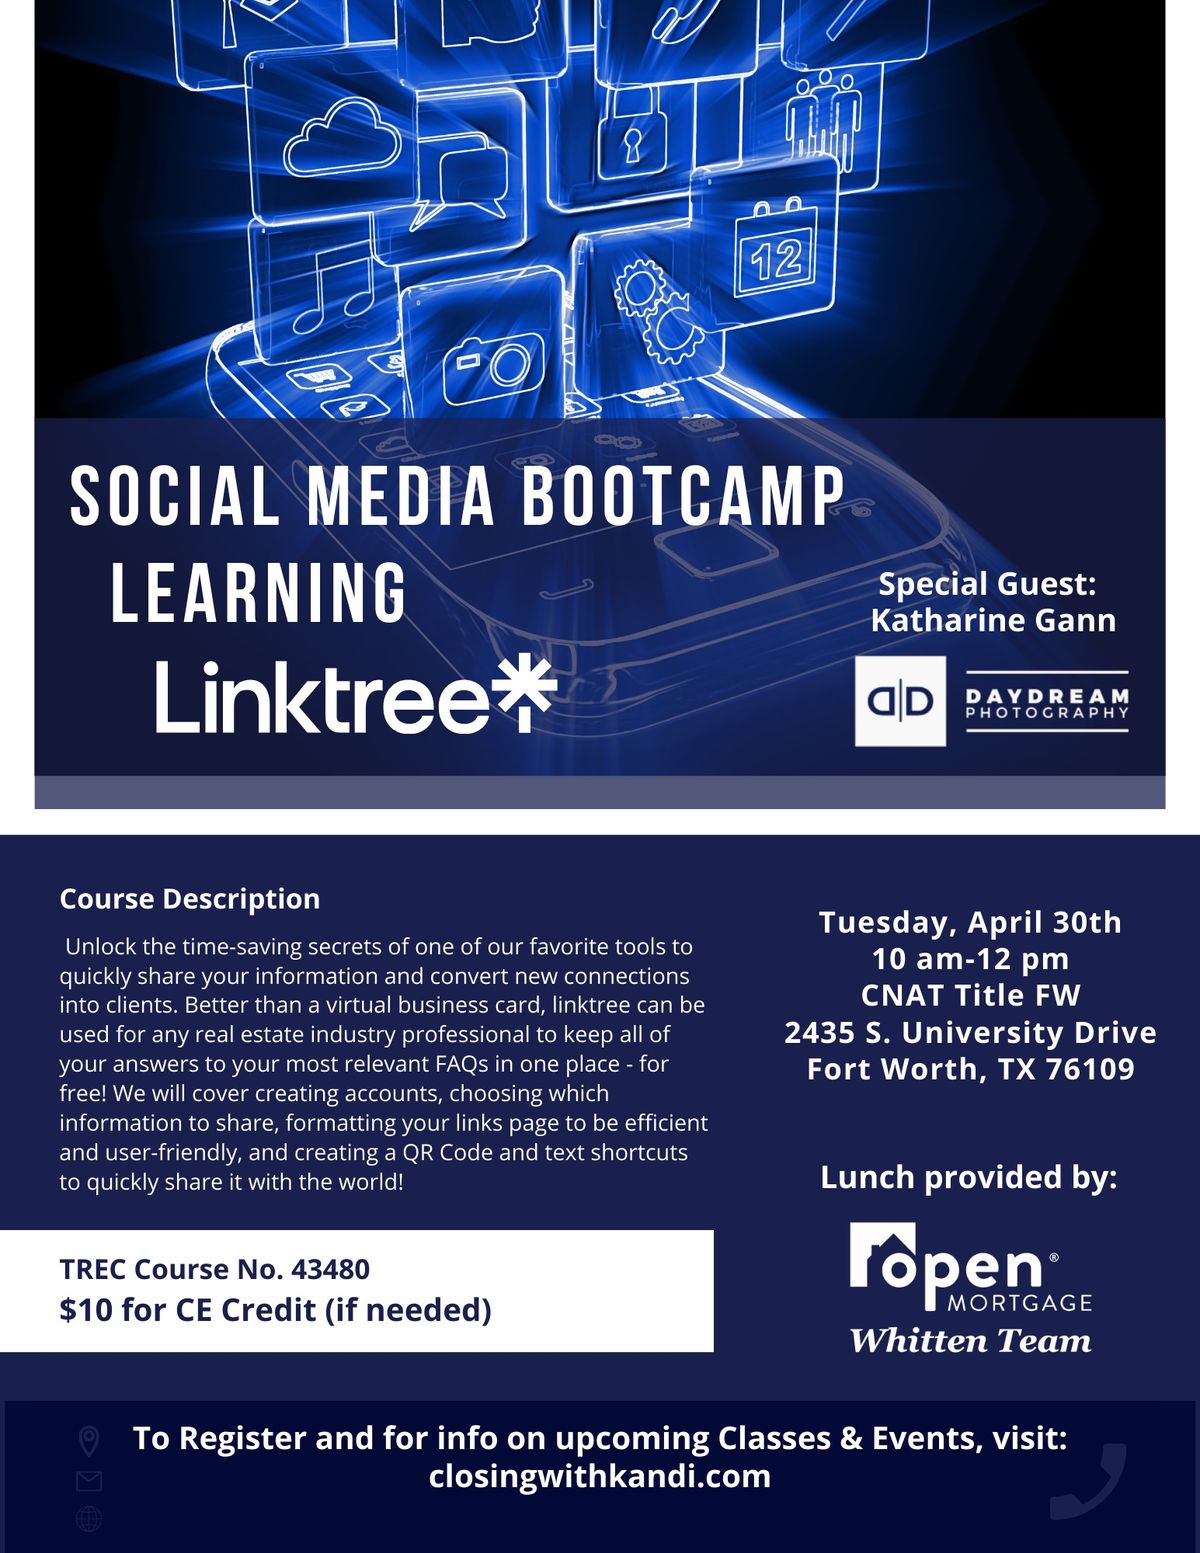 Social Media Bootcamp: Learning Linktree